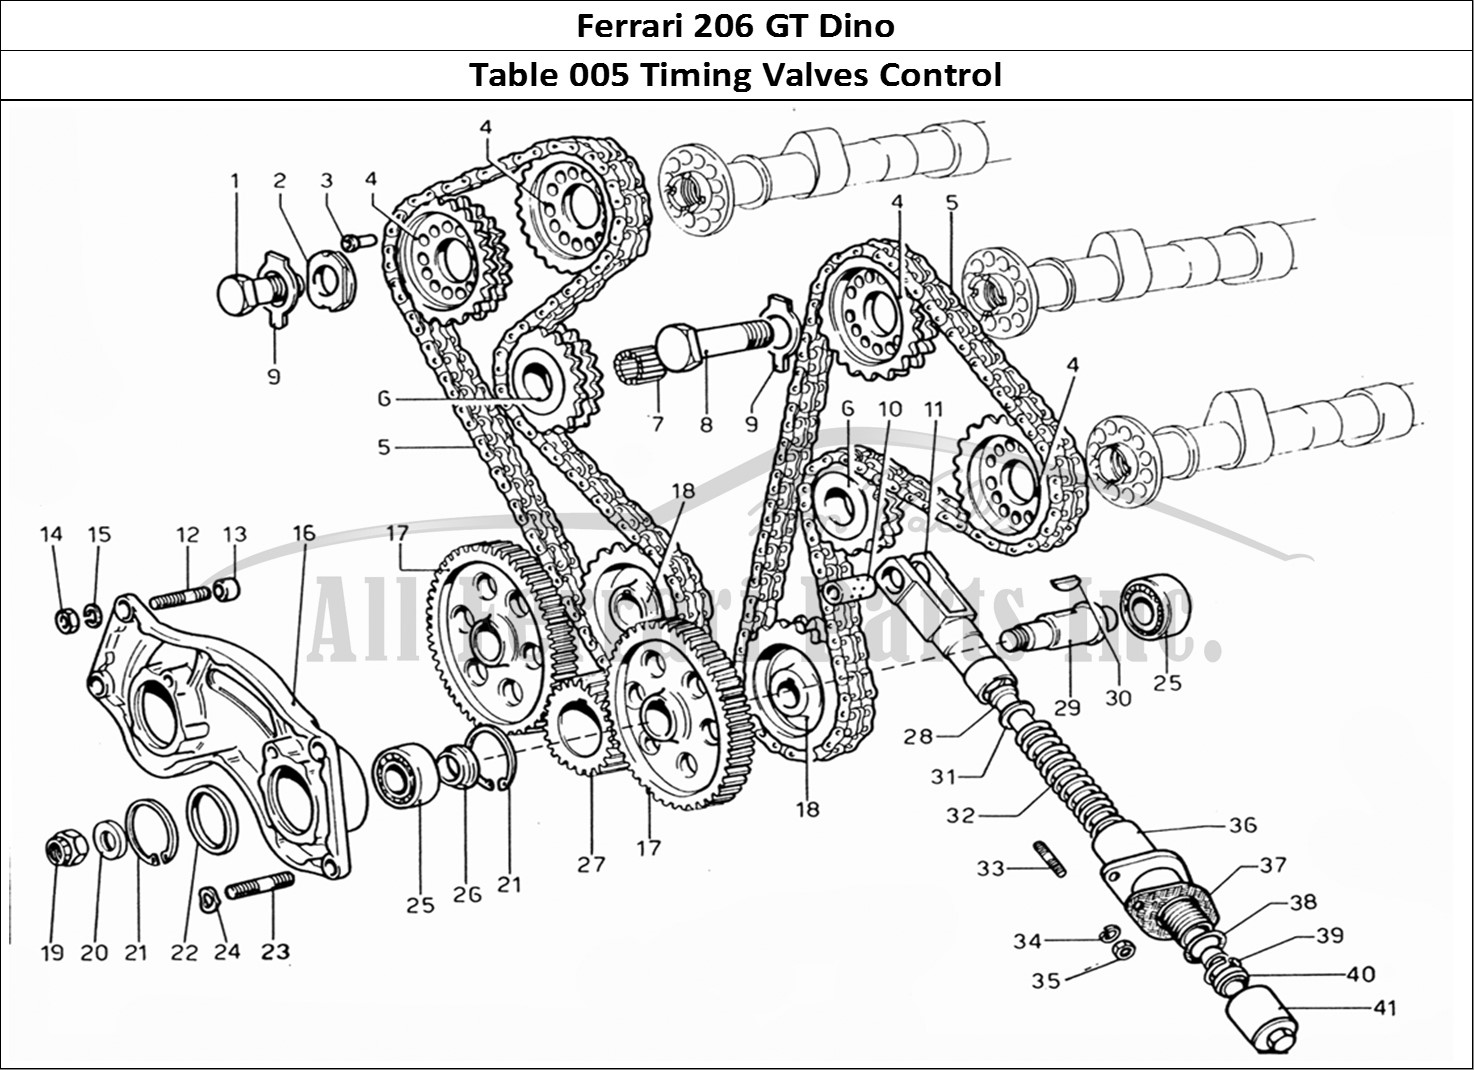 Ferrari Parts Ferrari 206 GT Dino (1969) Page 005 Timing Control